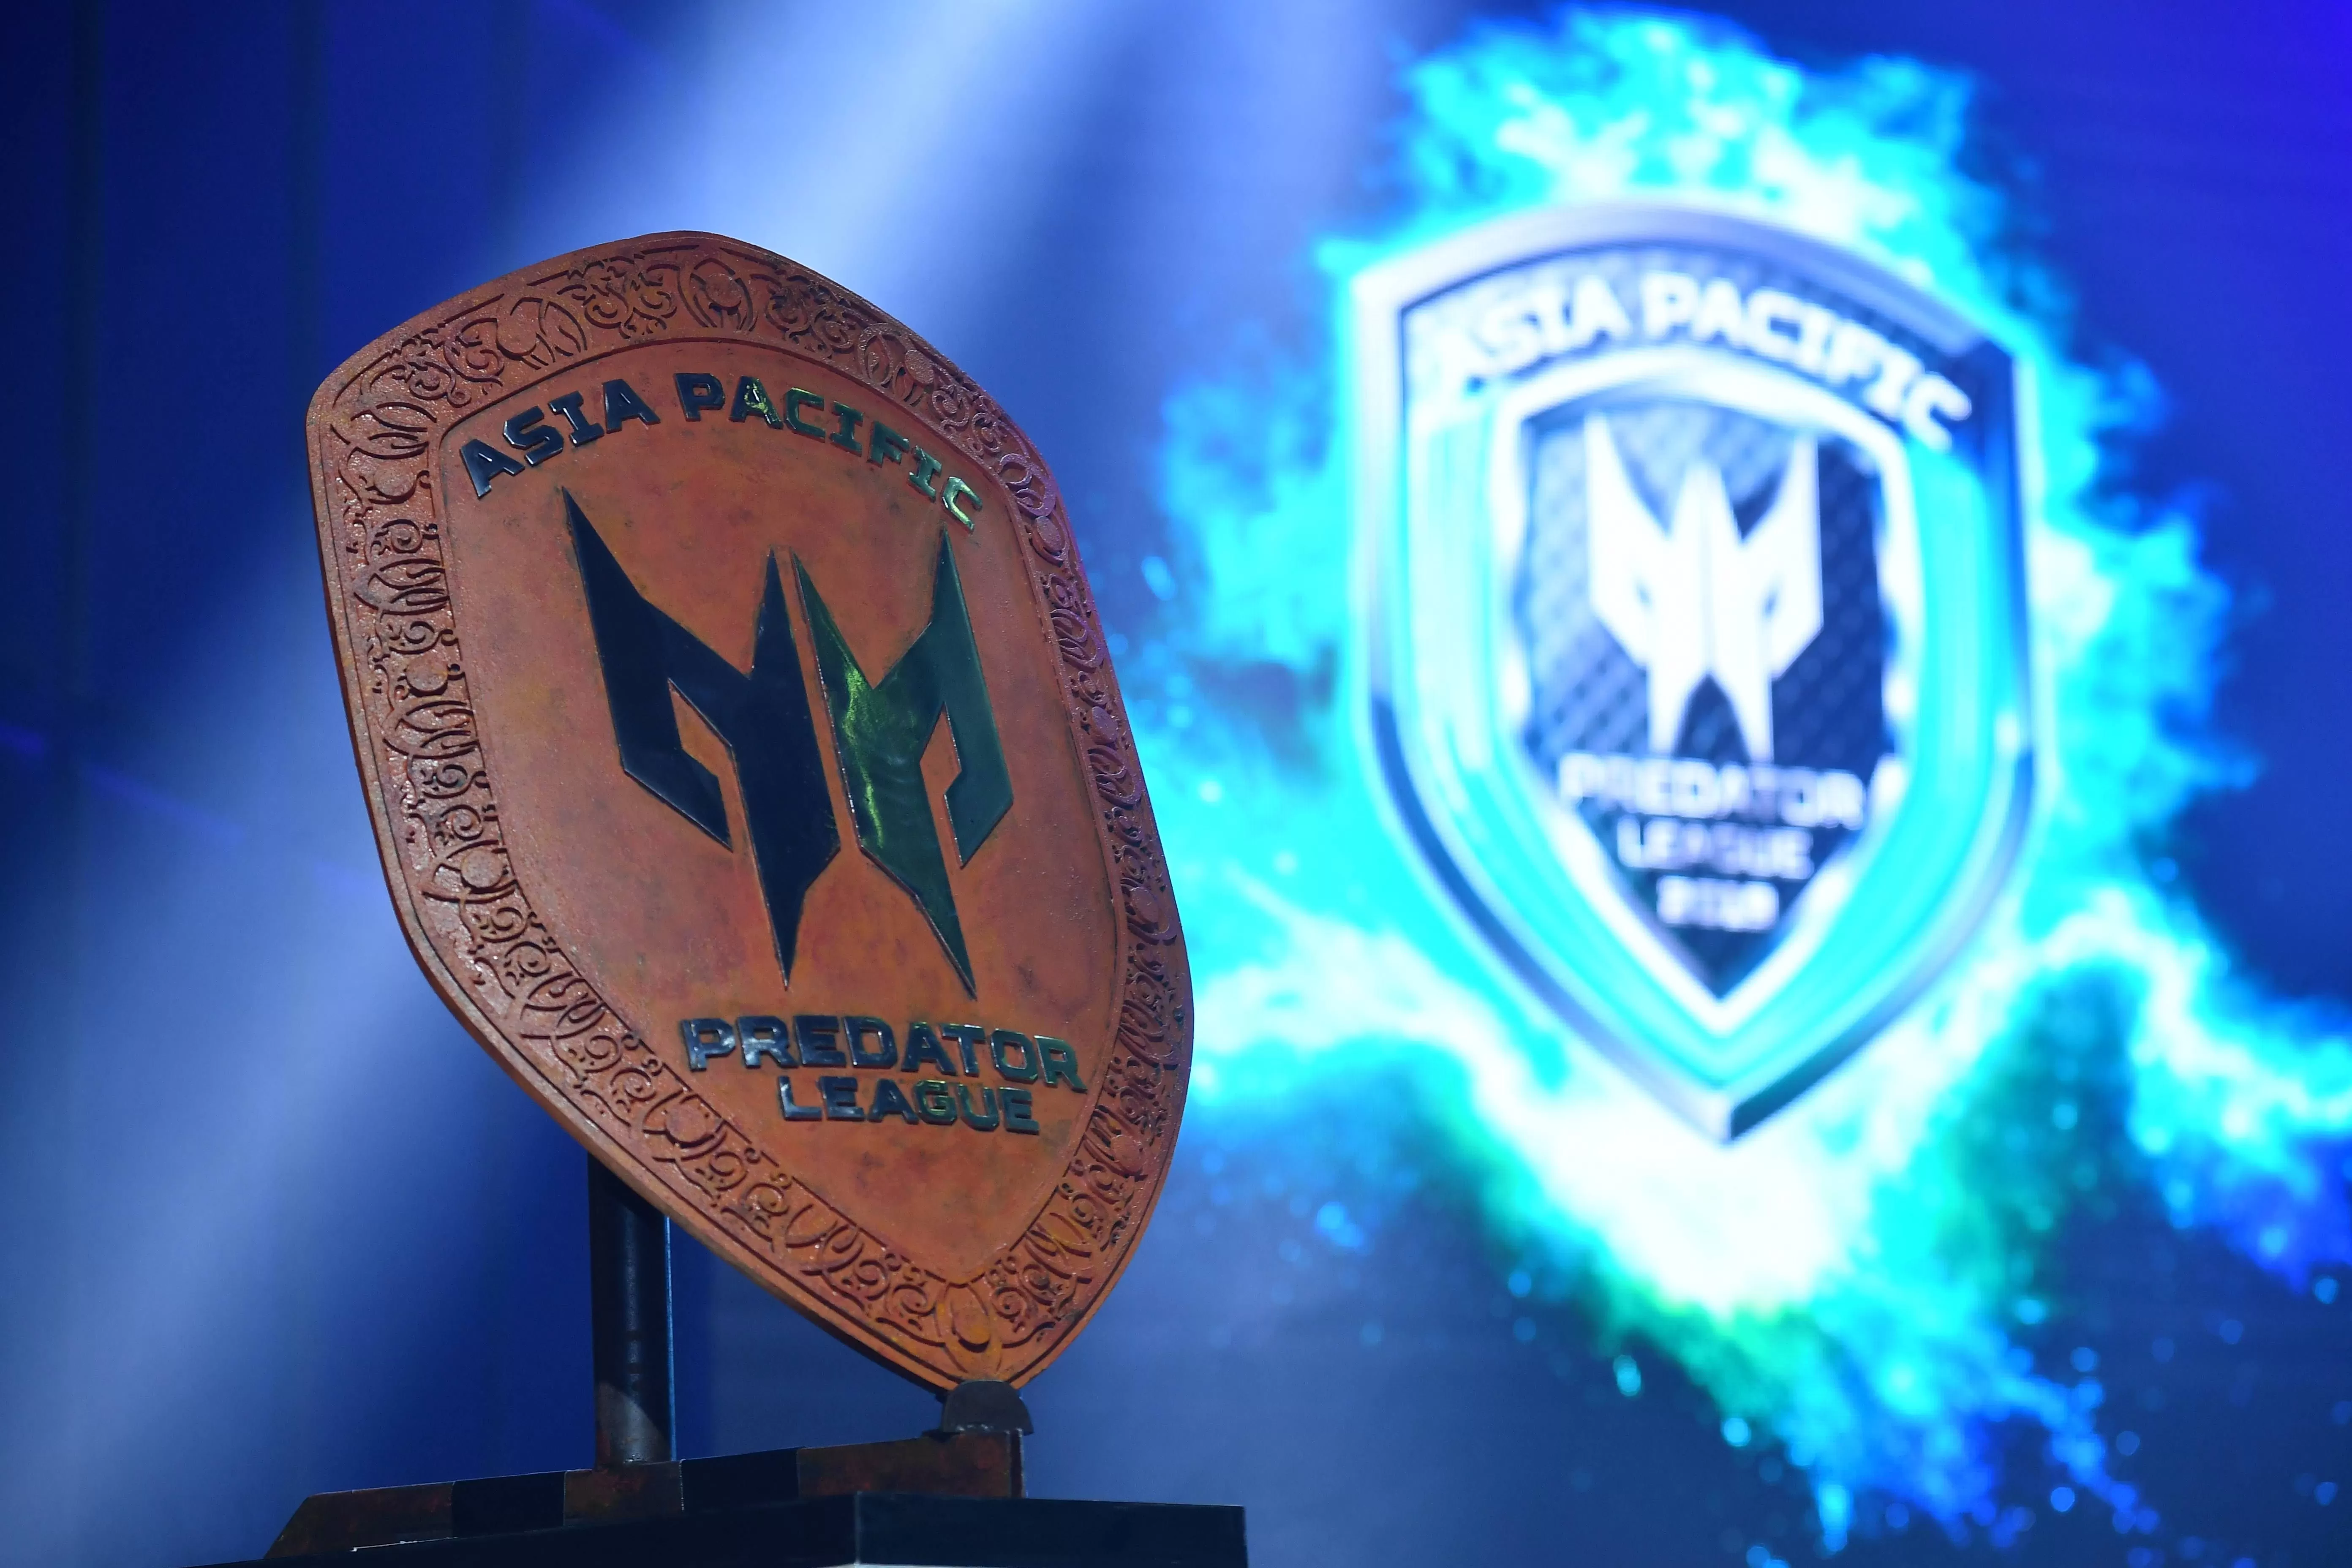 ARR 6831 | acer | 26 ทีมอีสปอร์ต DOTA2 และ PUBG ตบเท้าเข้าแข่งขันรอบแกรนด์ไฟนอล Asia Pacific Predator League 2019